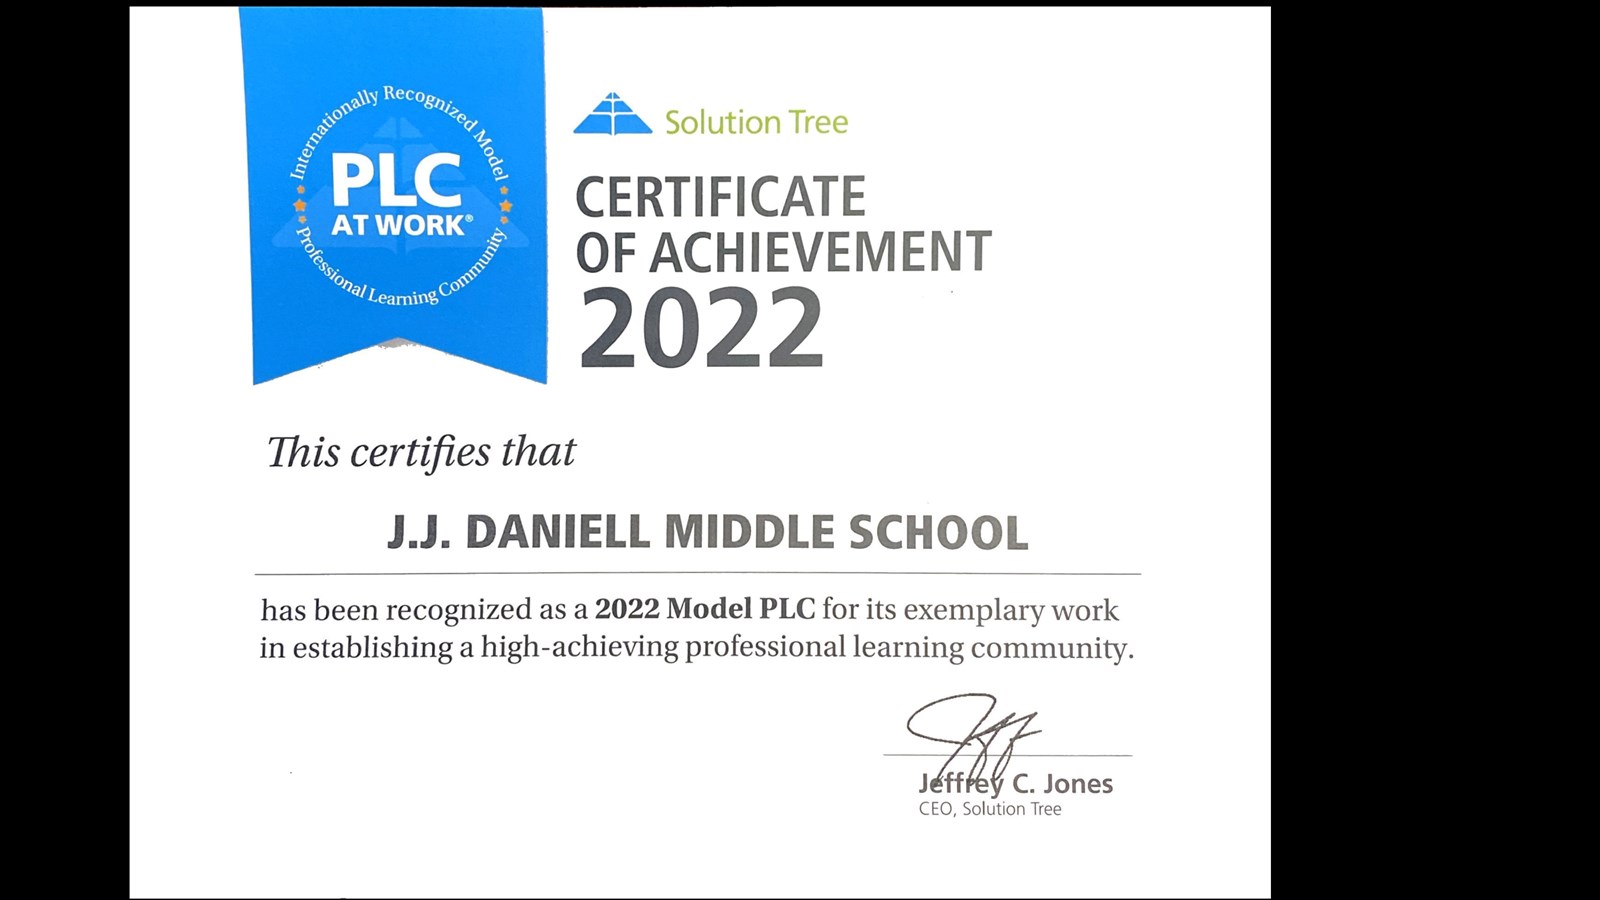 model plc school certificate of achievement hero image